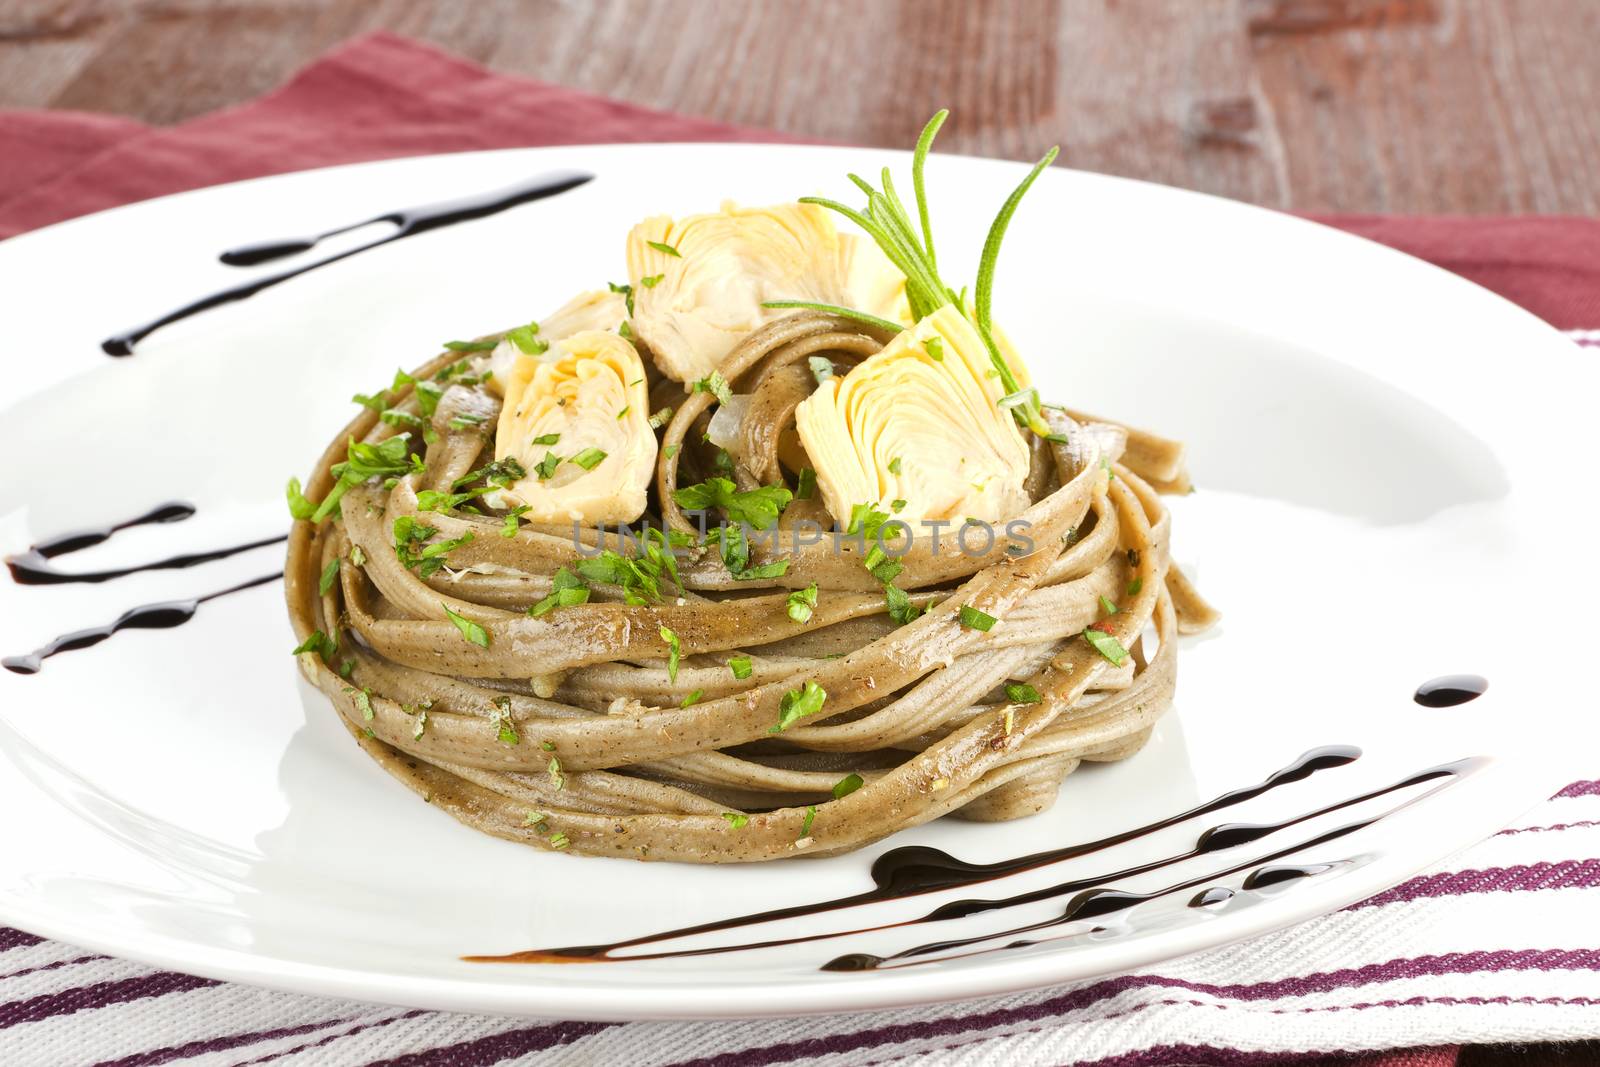 Pasta with artichoke hearts. by eskymaks